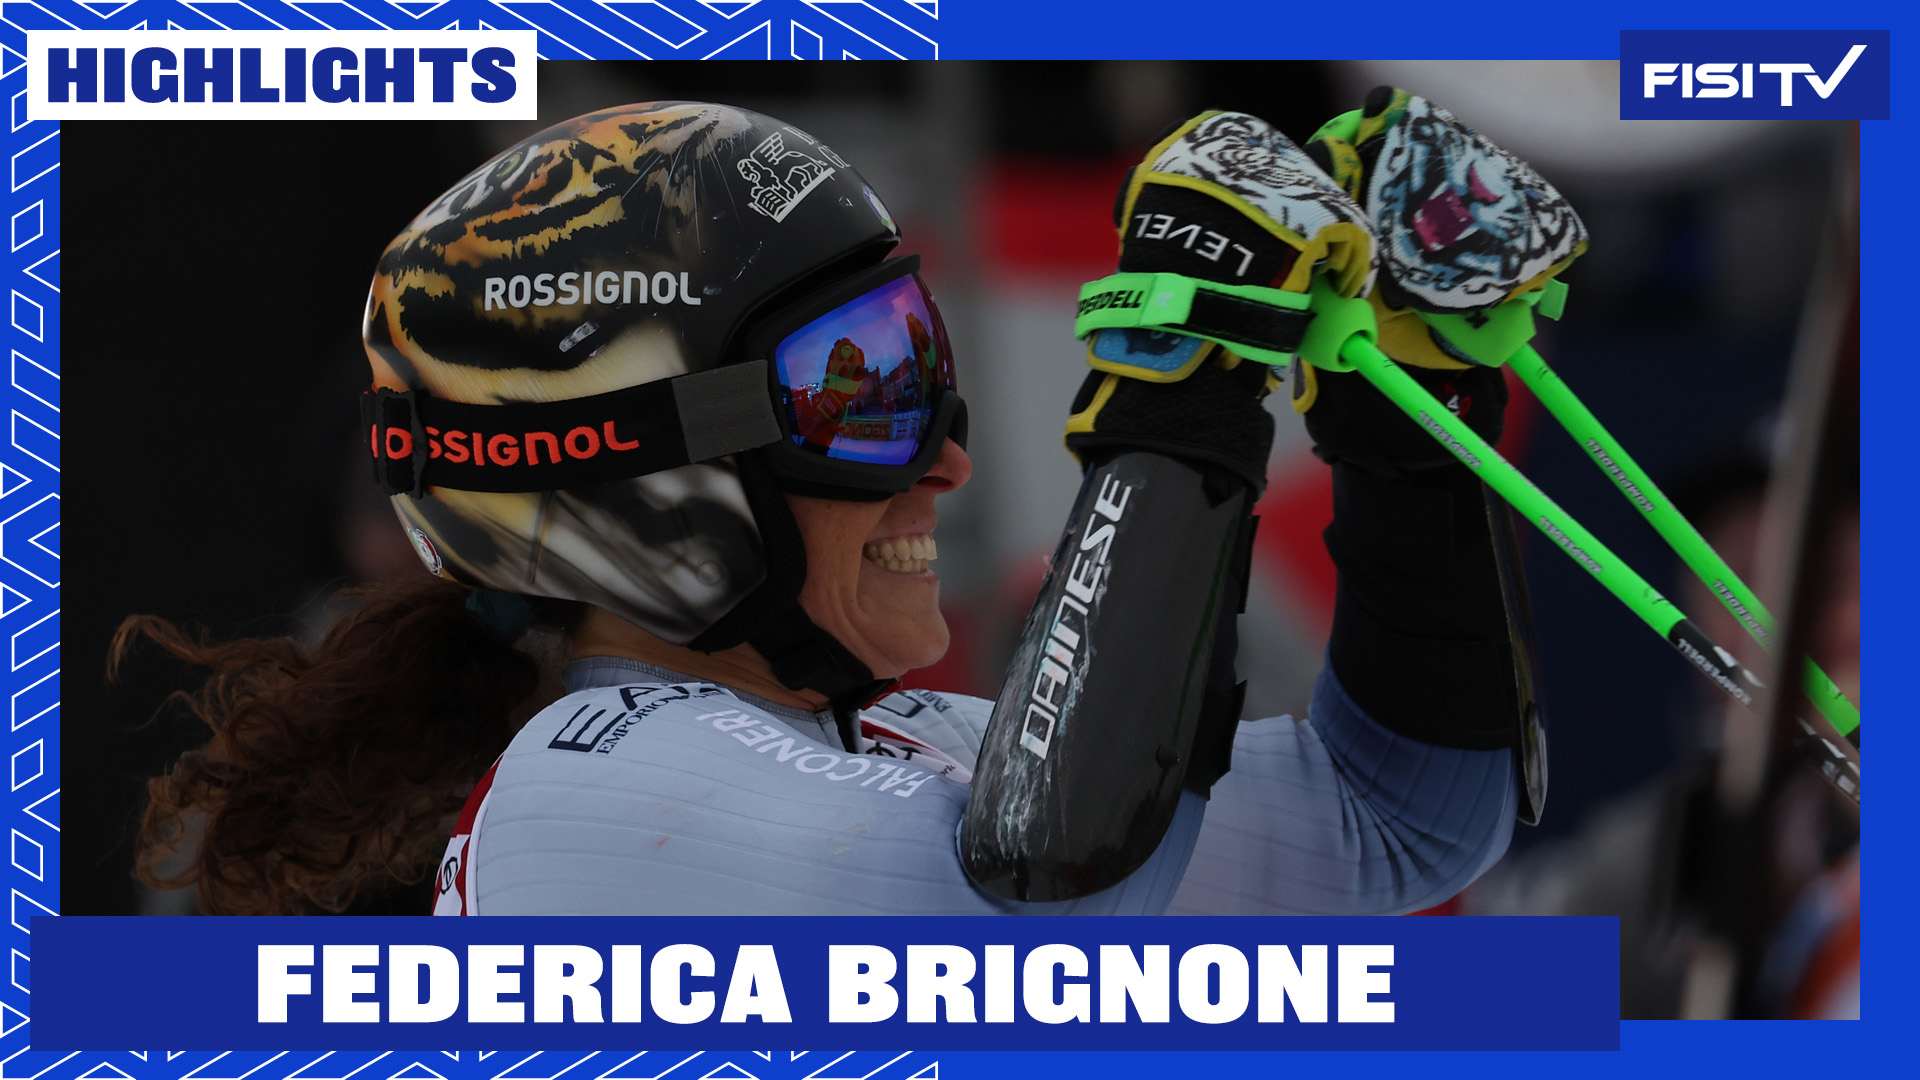 Federica Brignone trionfa in gigante a Tremblant | FISI TV